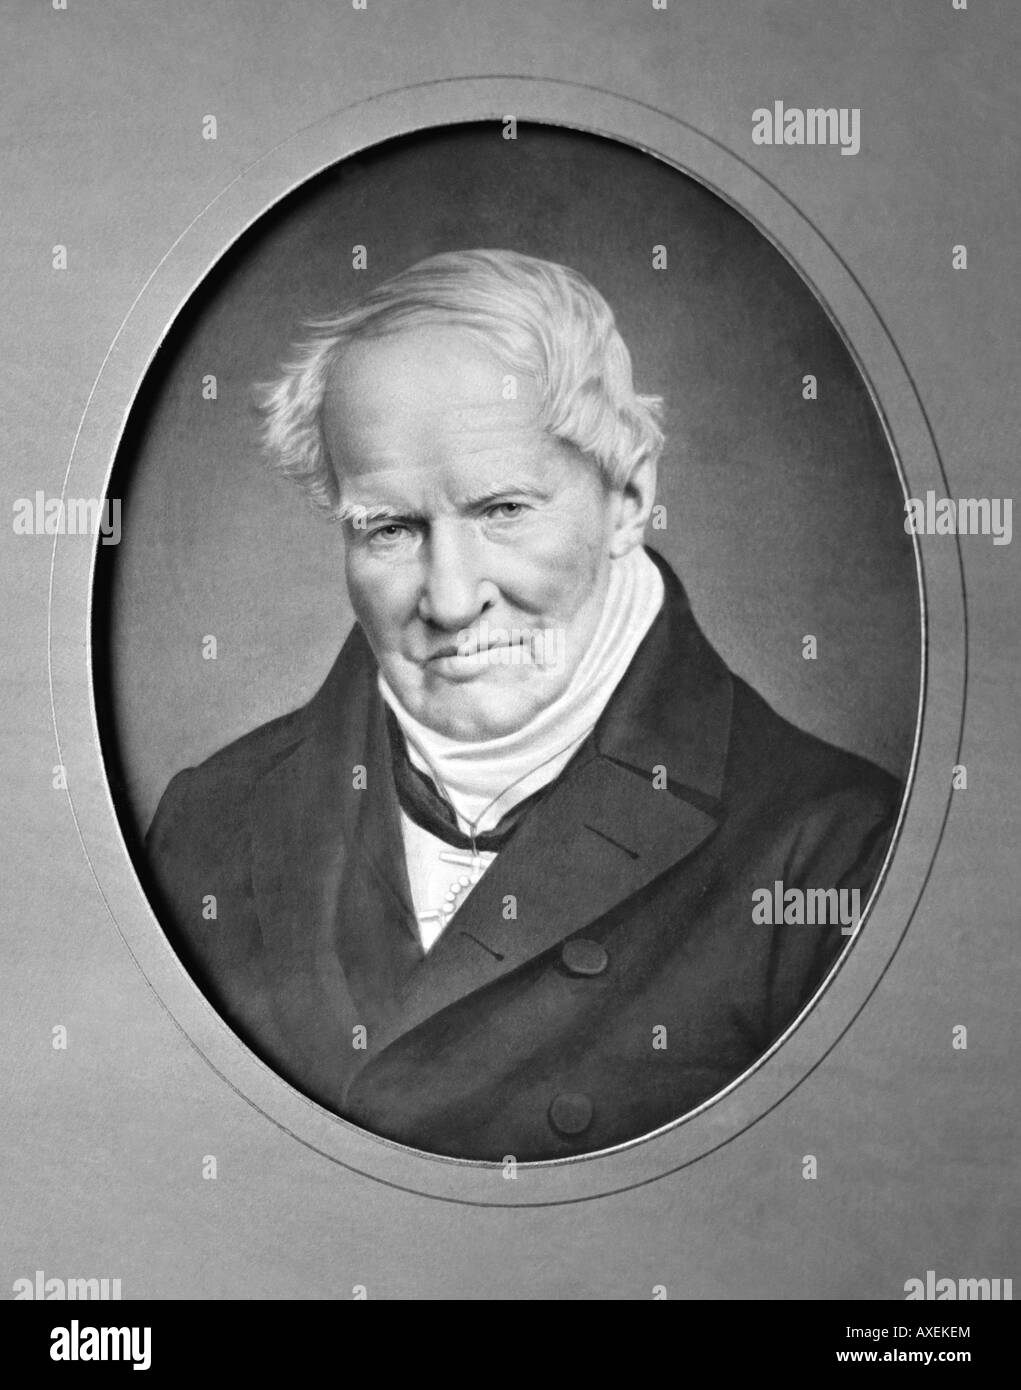 Alexander von Humboldt, 1769 - 1859 naturalist, botanist, explorer and geologist. Stock Photo